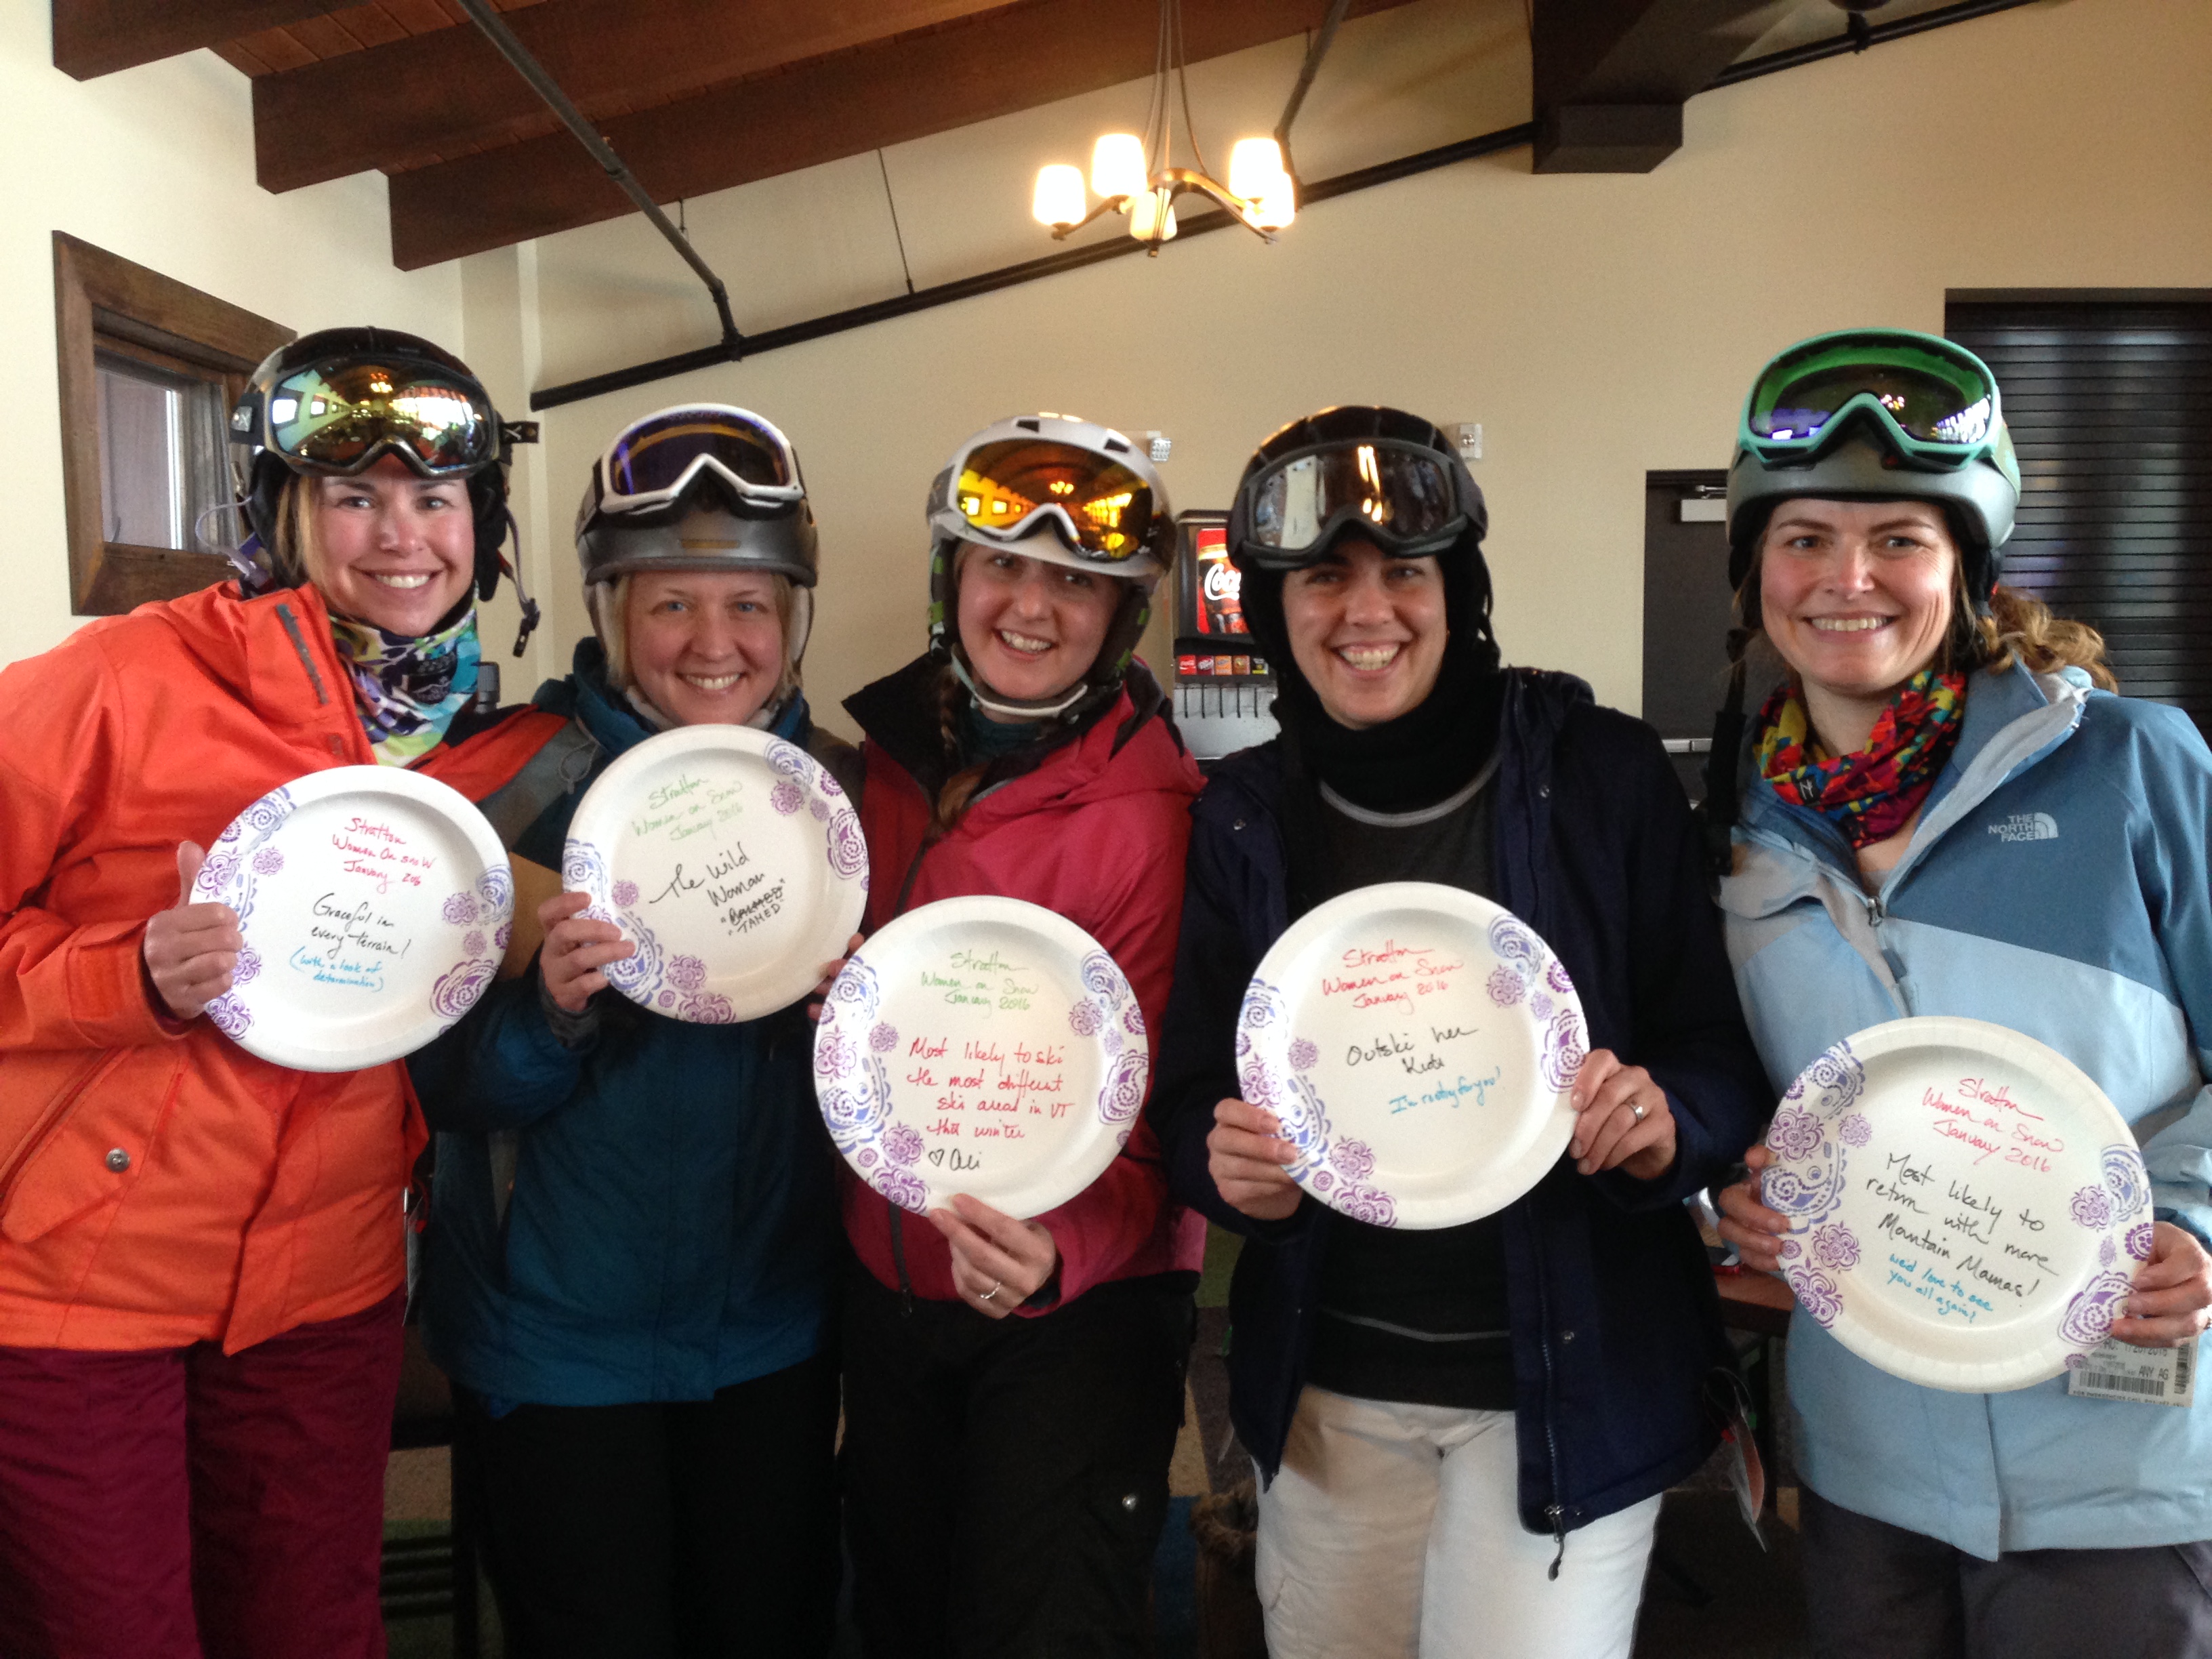 Dana Freeman Travels Ski Camp at Stratton: Women on snoW